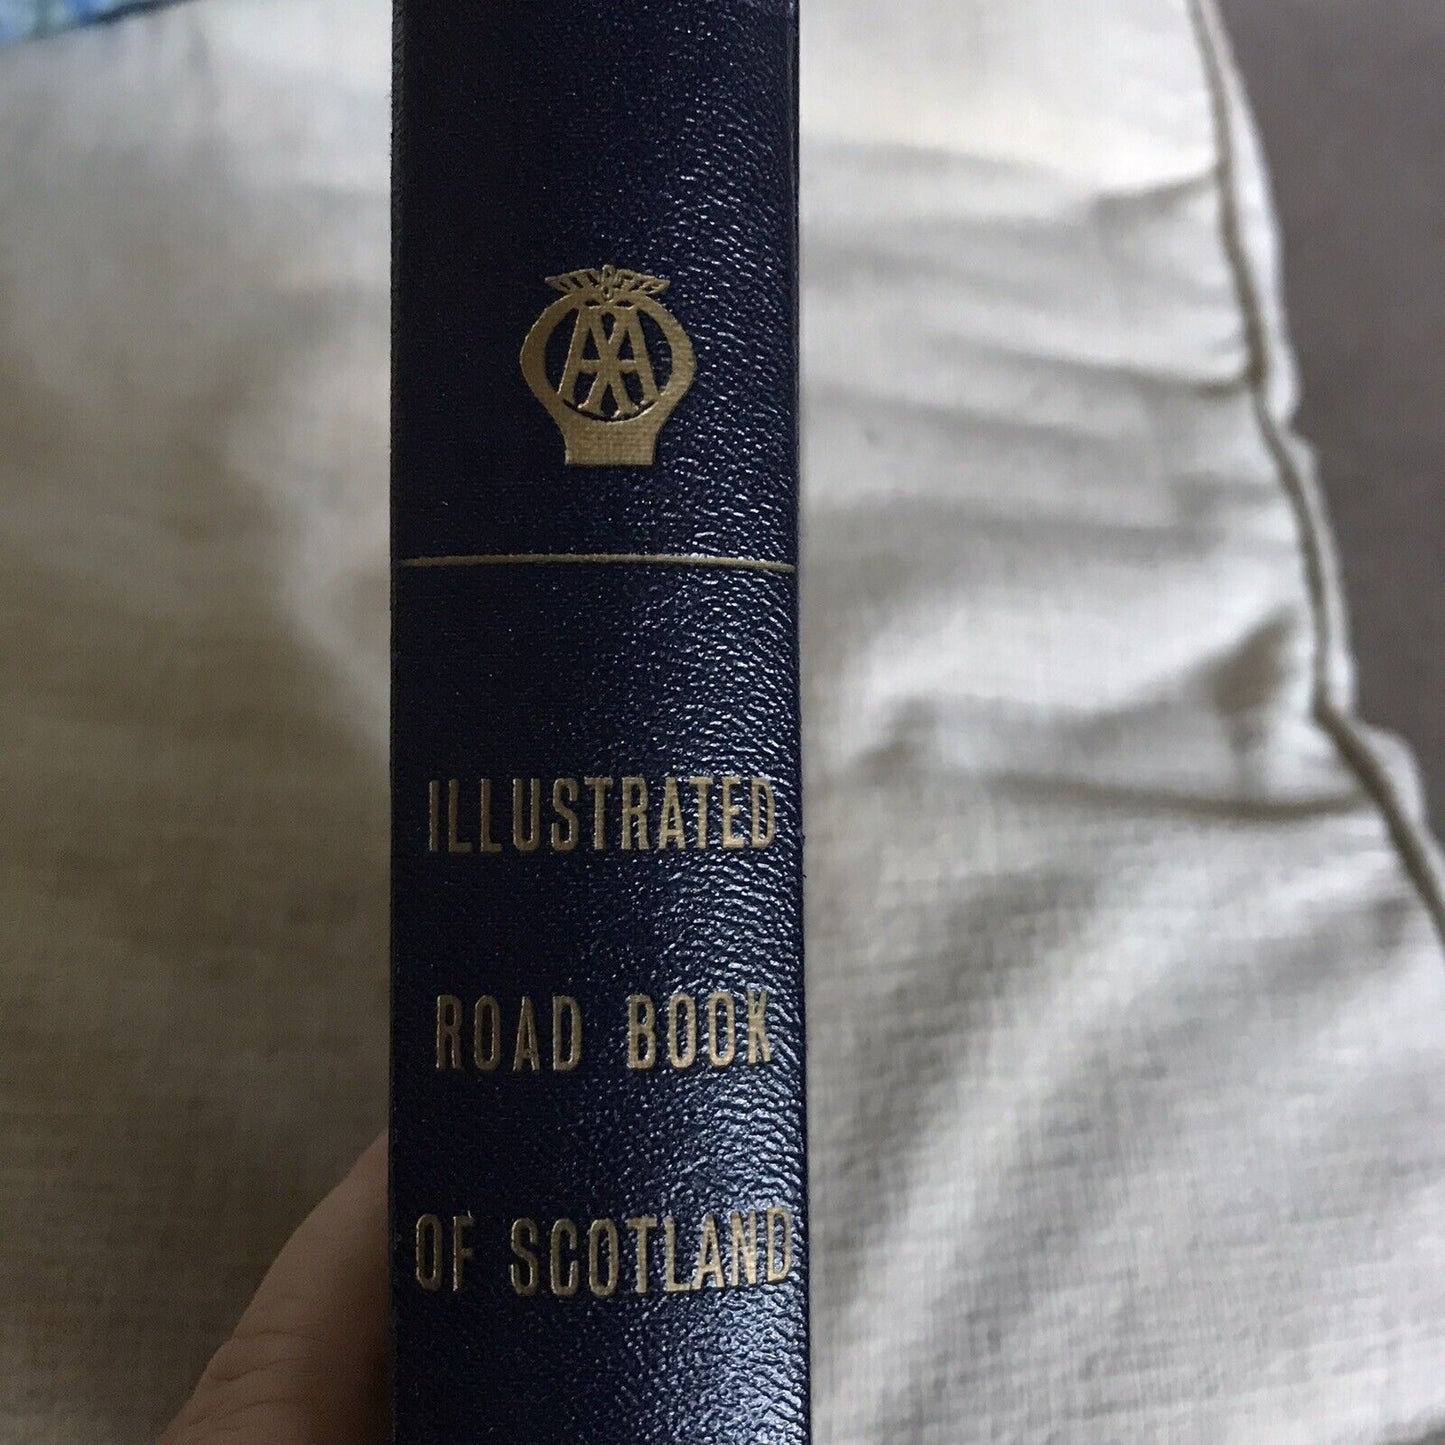 1960*1.* AA Illustrated Road Book of Scotland *SELTEN* mit offiziellem AA-Lesezeichen